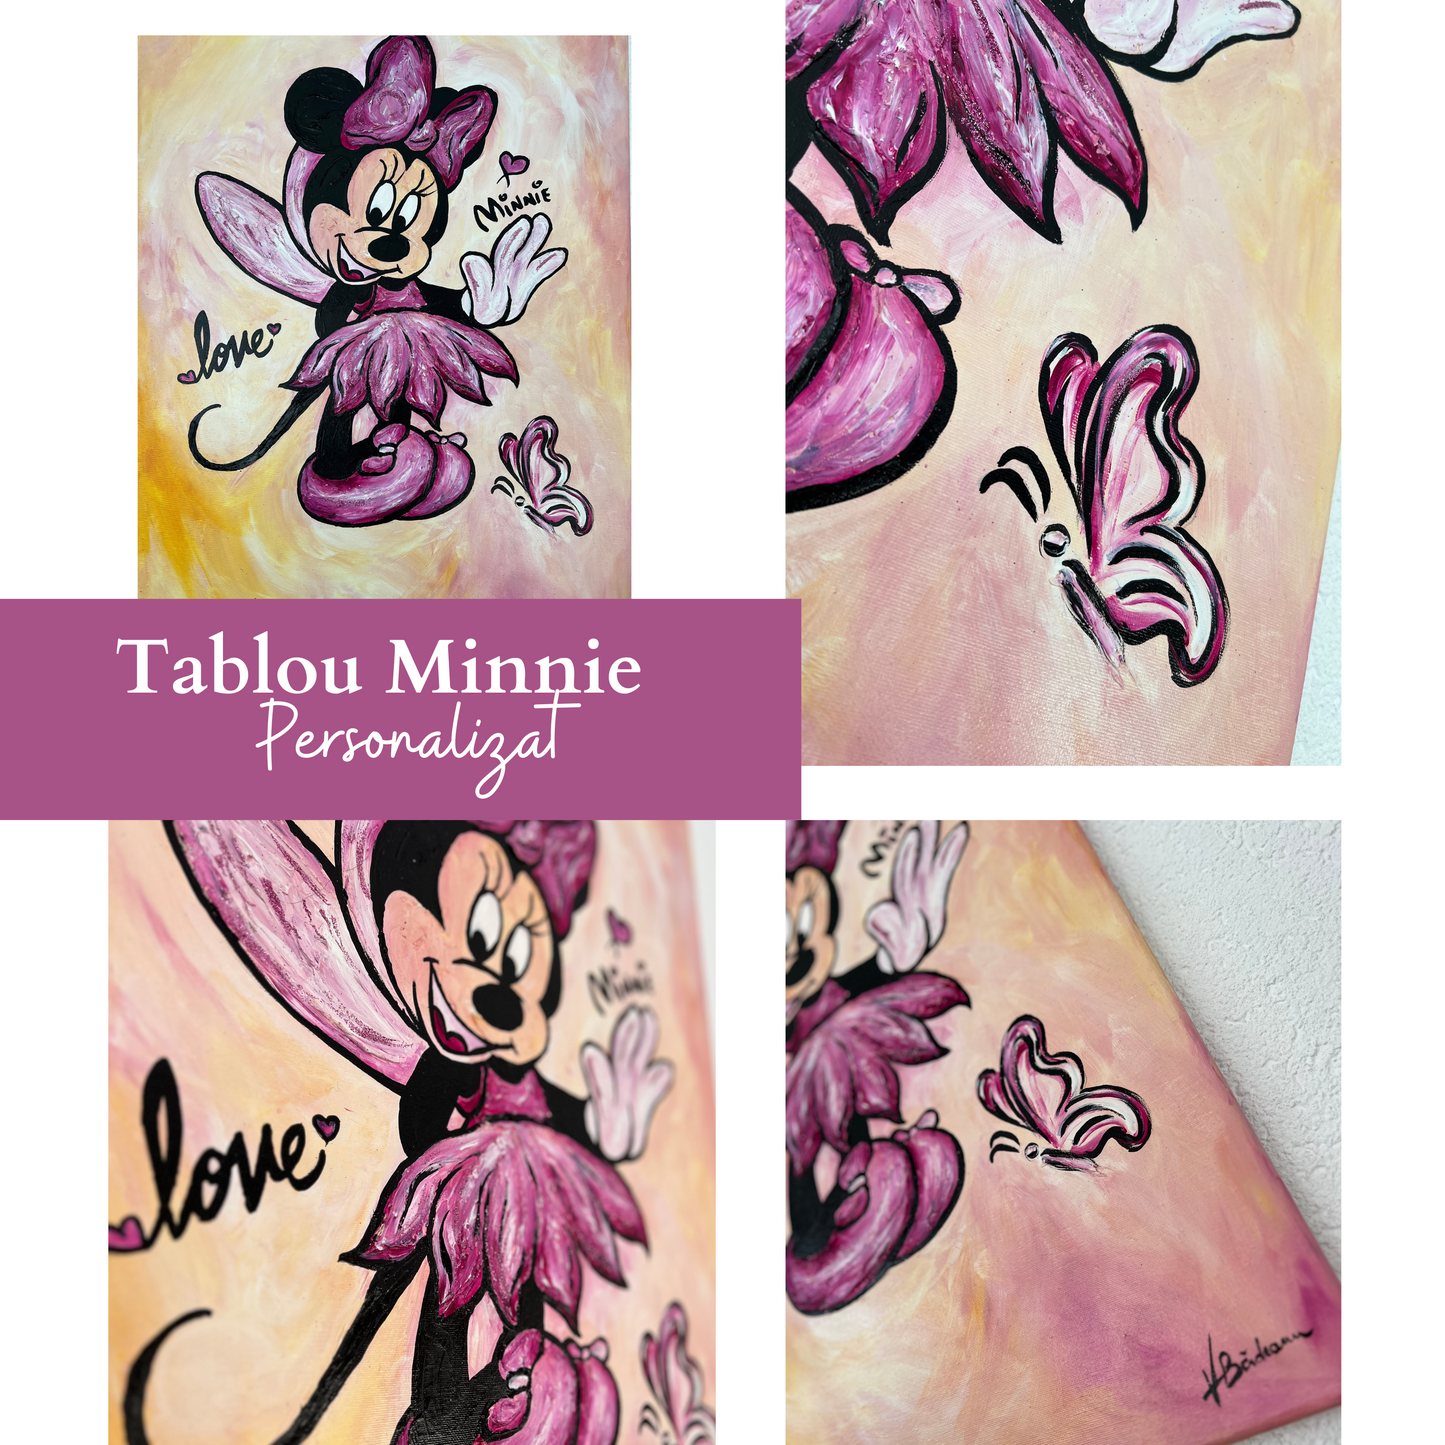 Tablou pictat manual Minnie Mouse